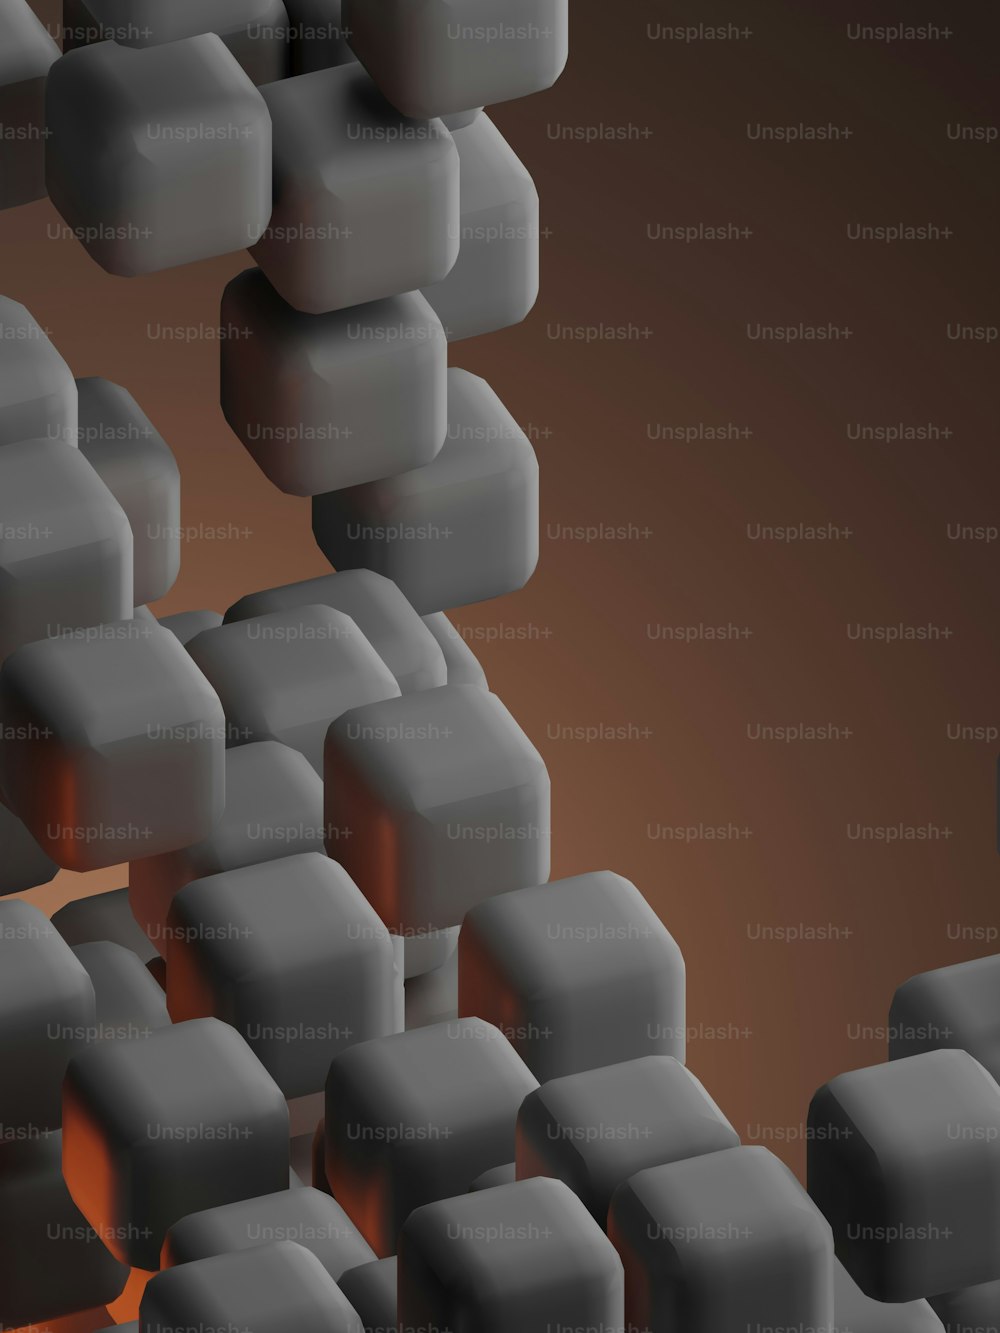 un'immagine generata al computer di un gruppo di cubi